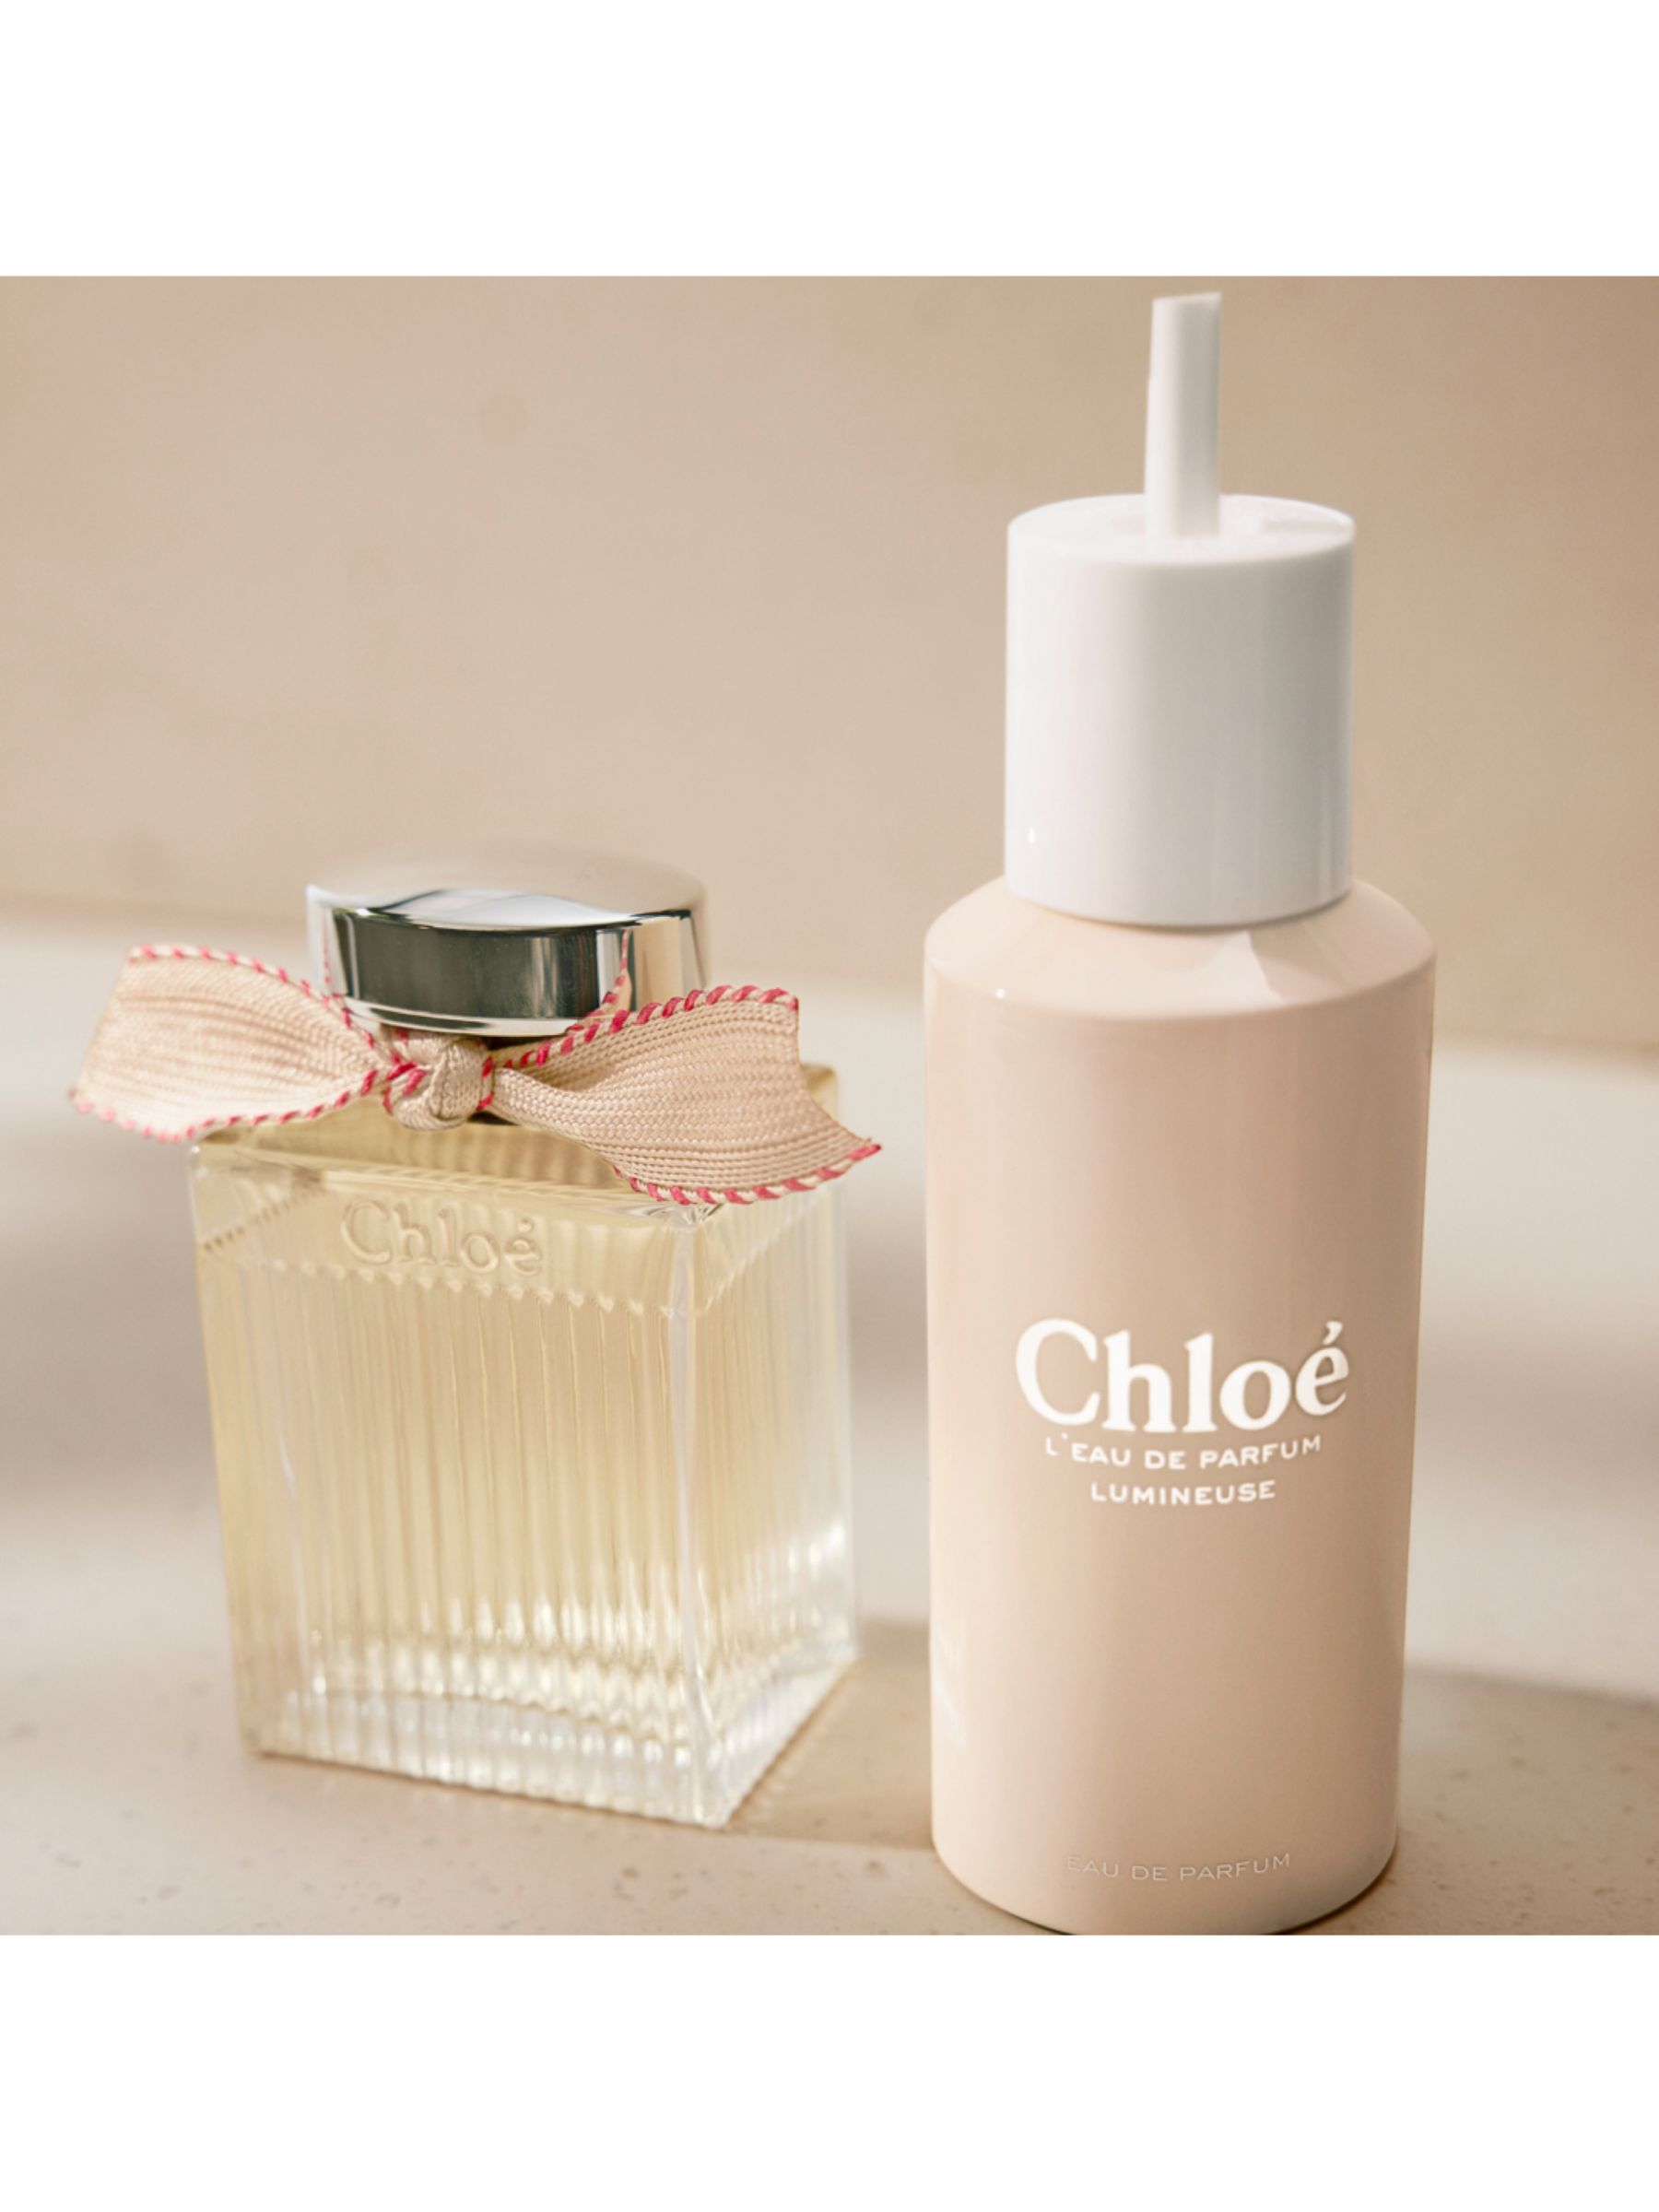 Chloé L’Eau de Parfum Lumineuse for Women Refill, 150ml 4